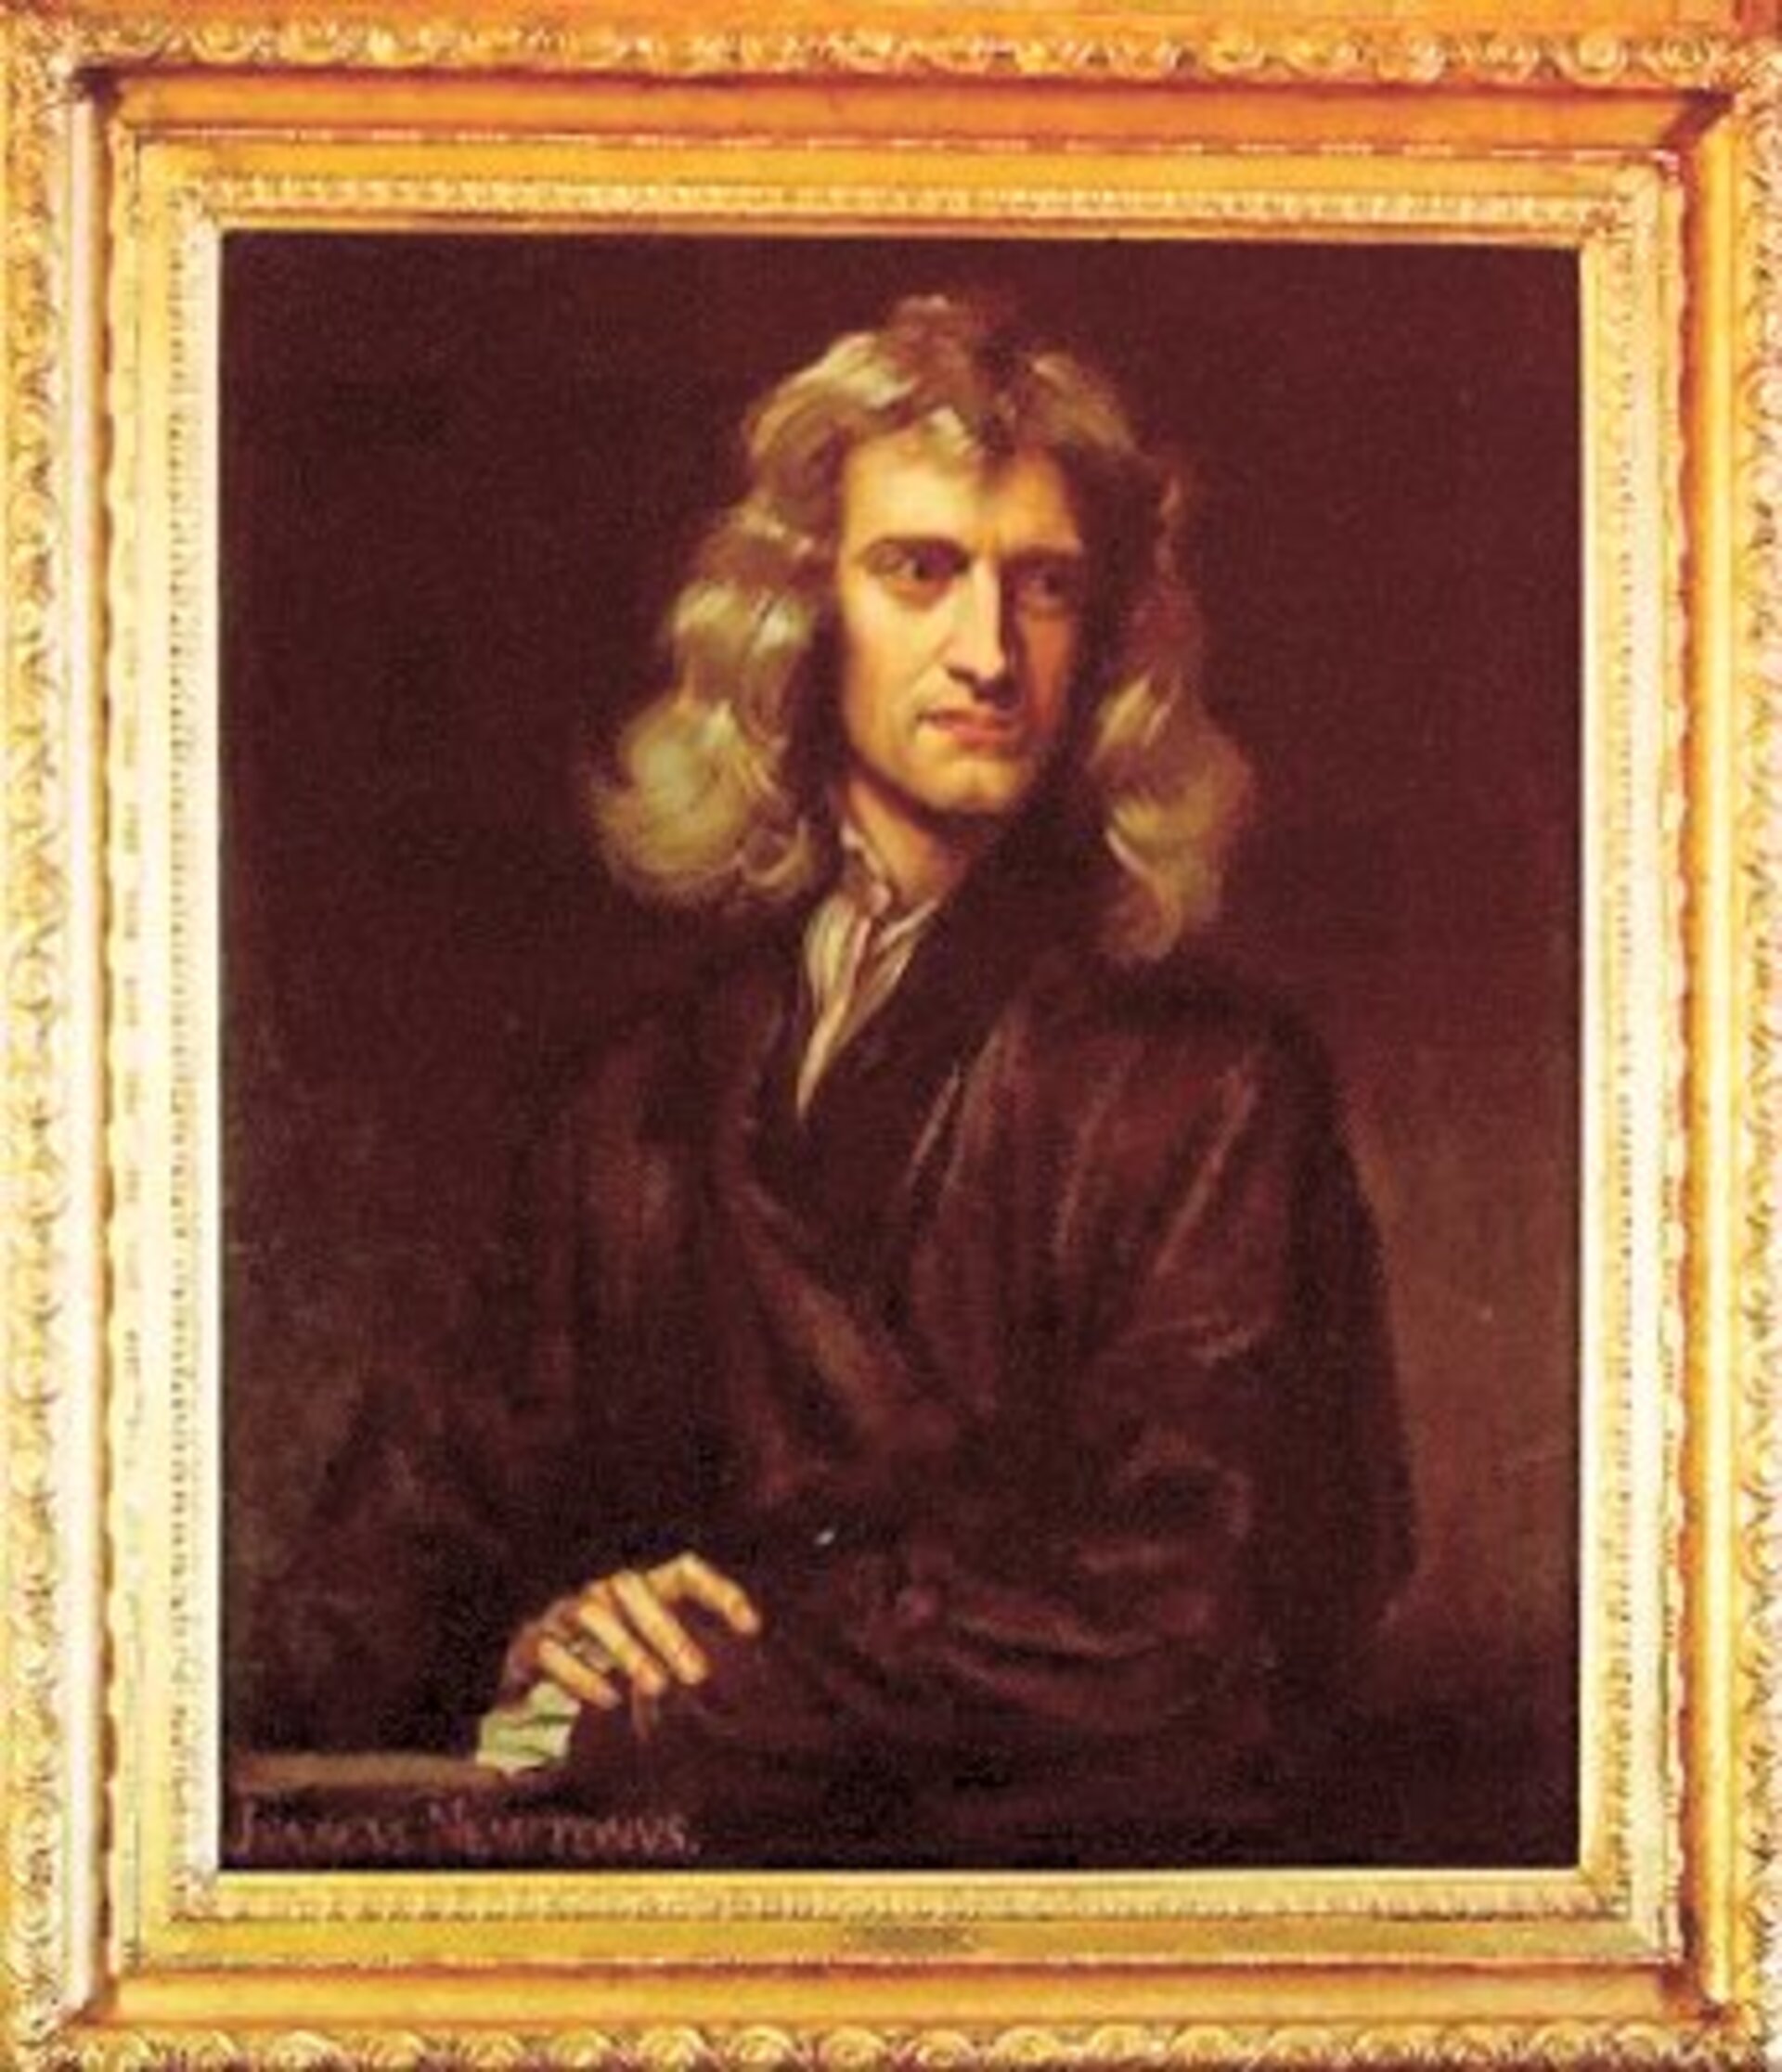 Sir Isaac Newton, 1642-1727